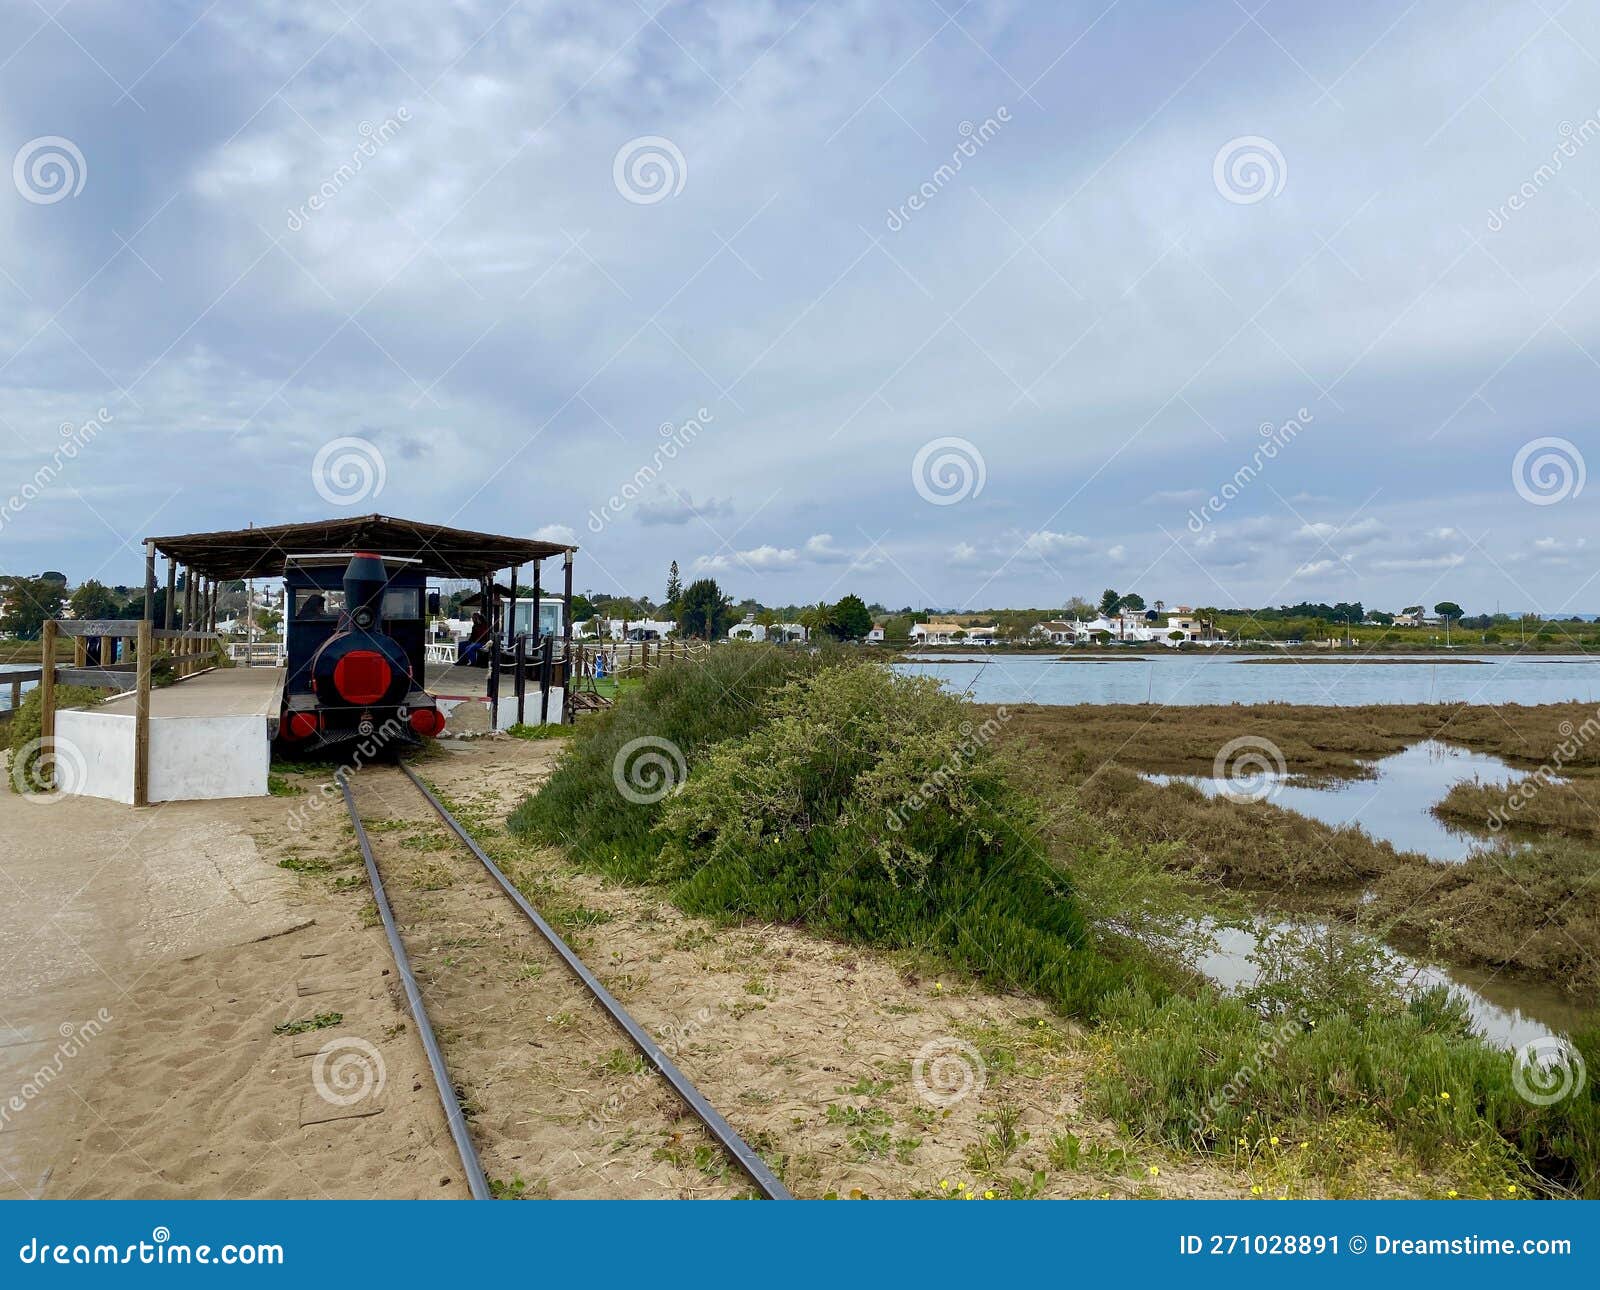 train to praia do barril beach in the ria formosa natural park in luz de tavira